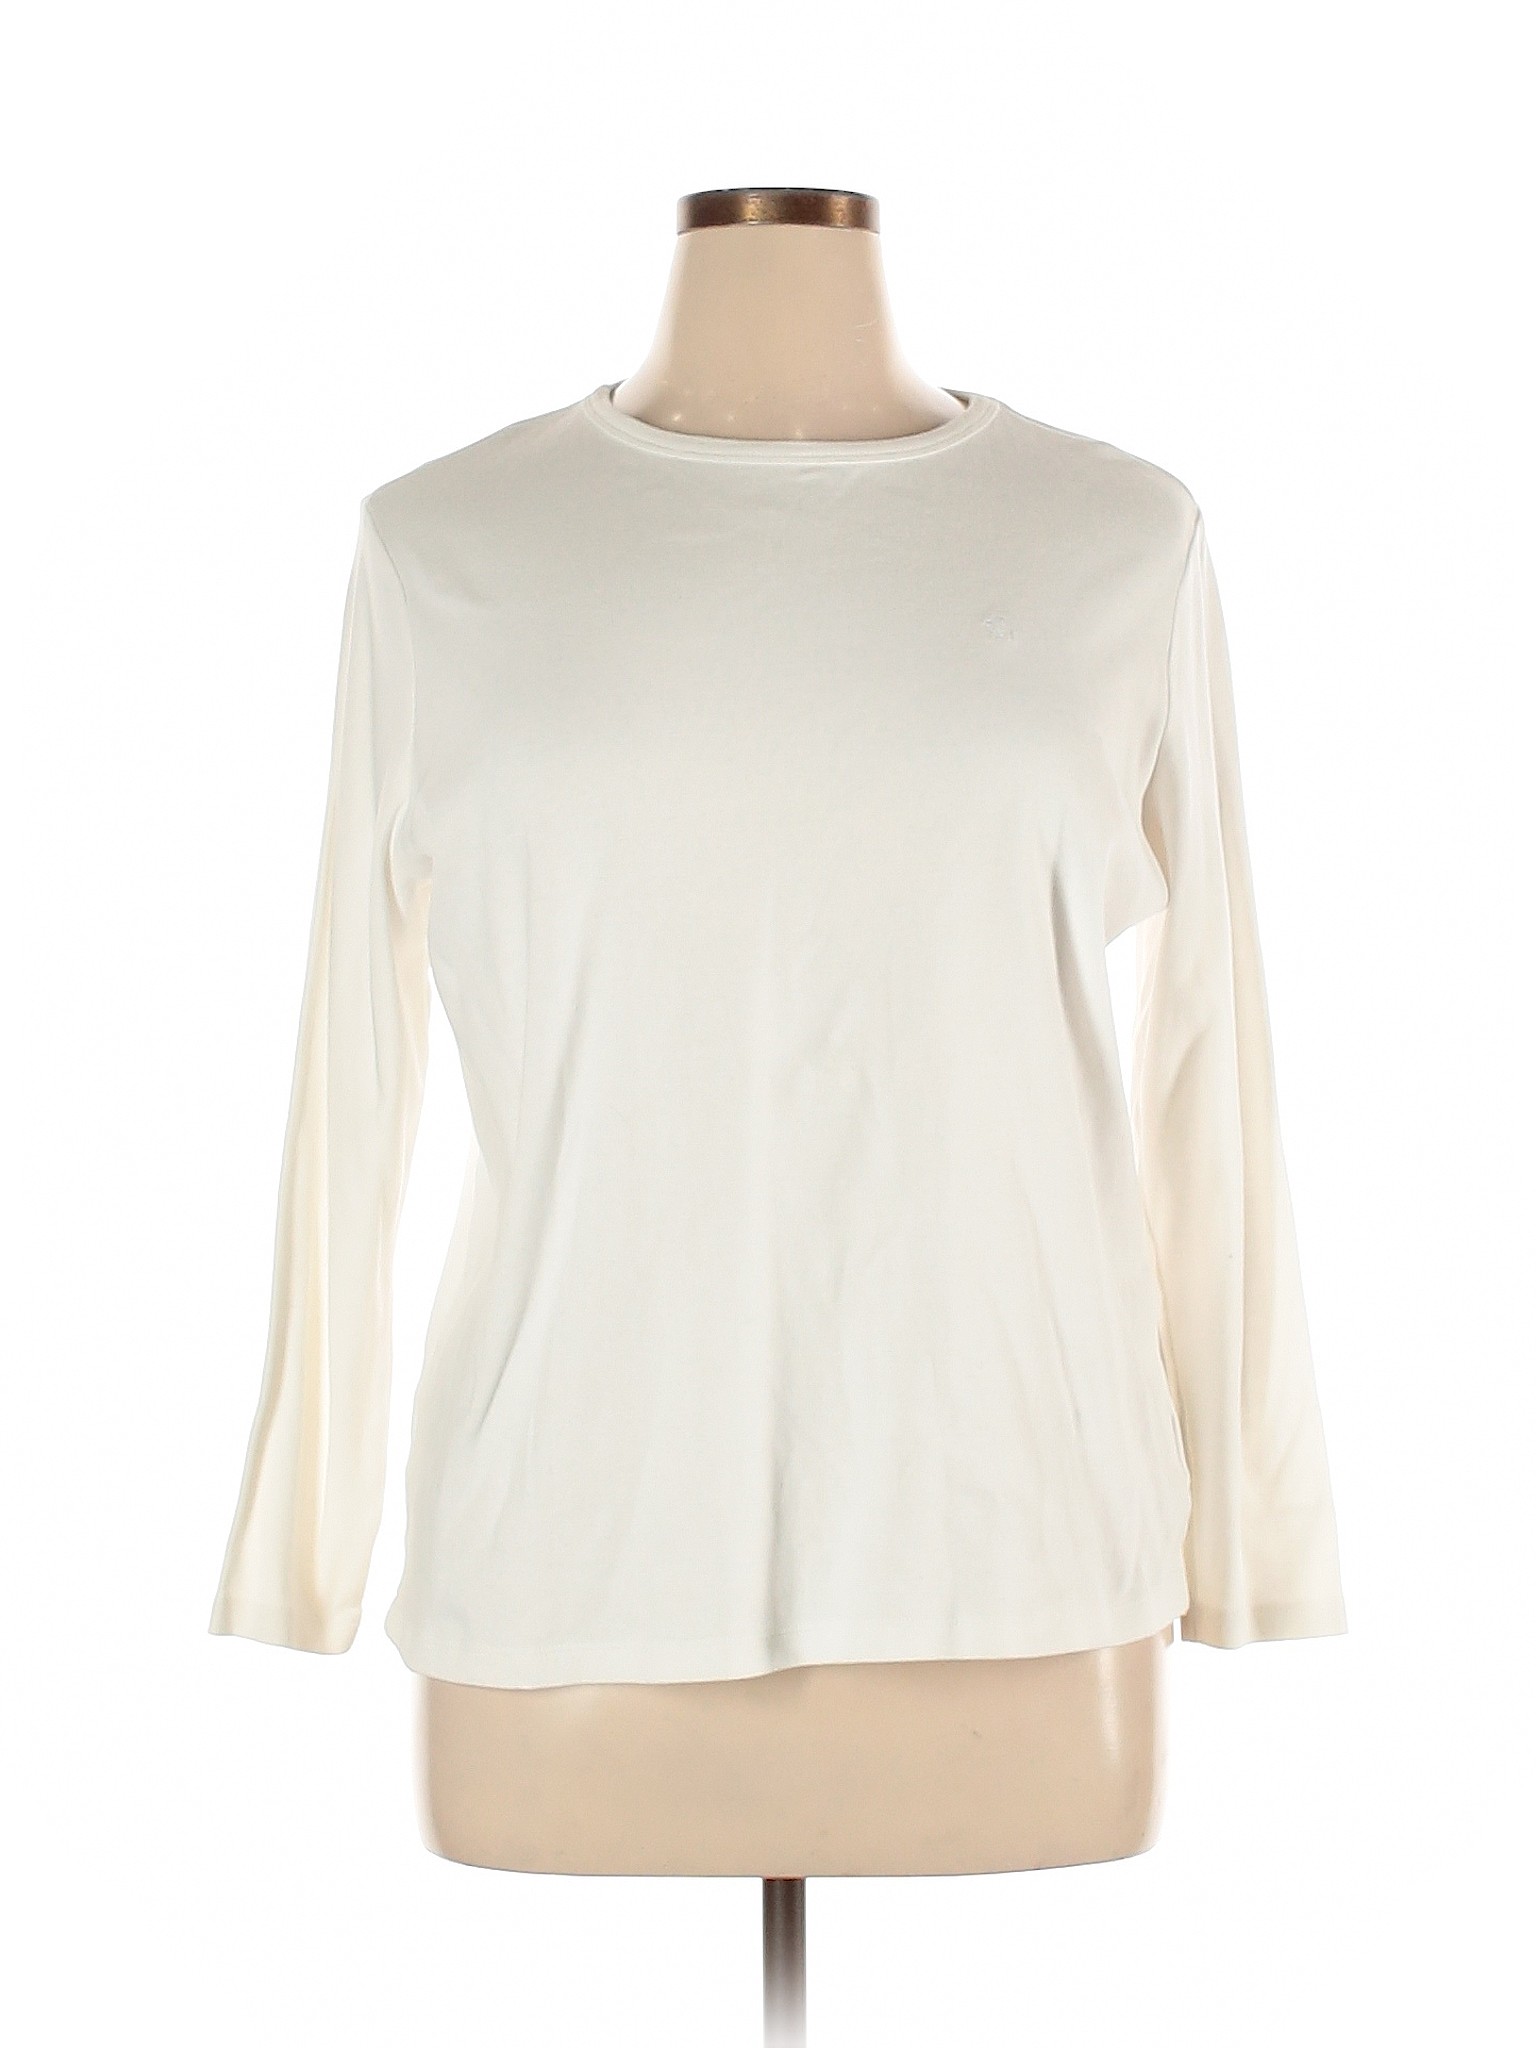 Lauren by Ralph Lauren Women White Long Sleeve T-Shirt 1X Plus | eBay